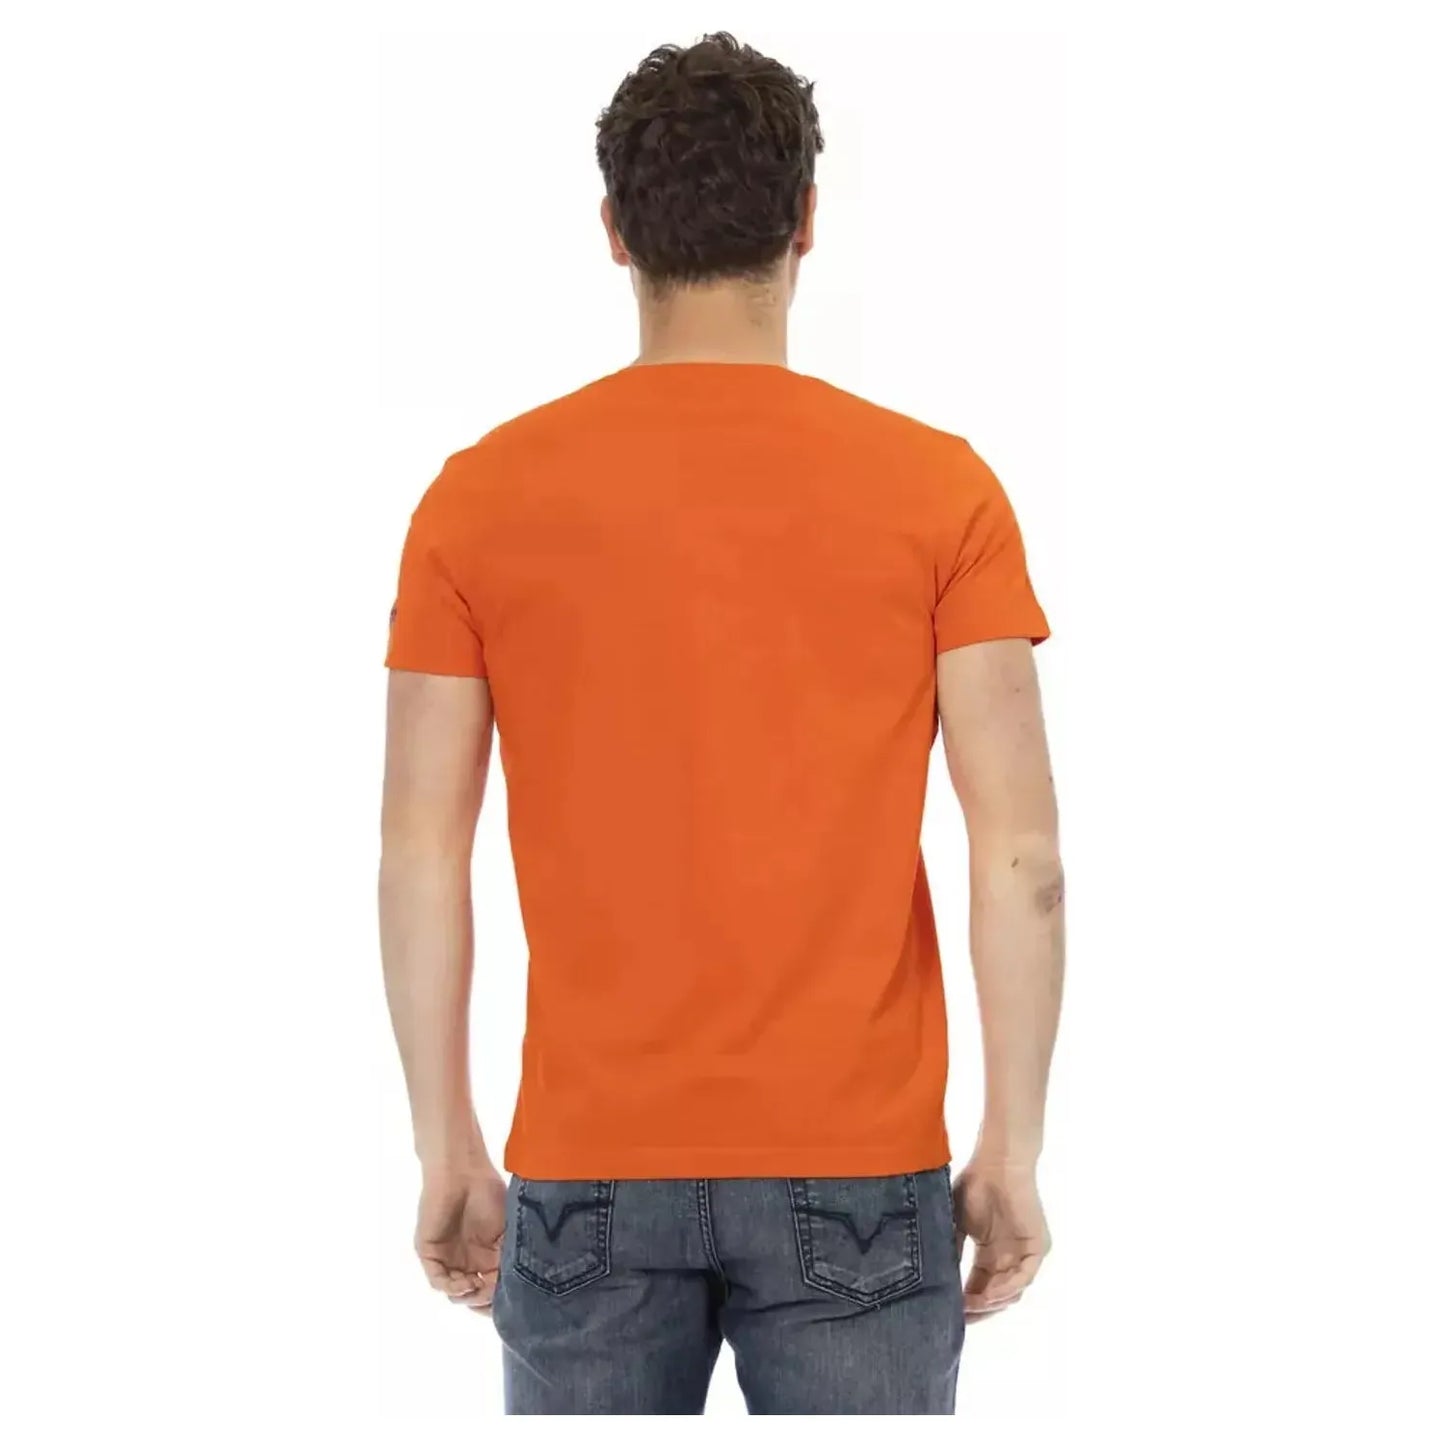 Trussardi ActionSleek Orange Short Sleeve Tee with Front PrintMcRichard Designer Brands£59.00